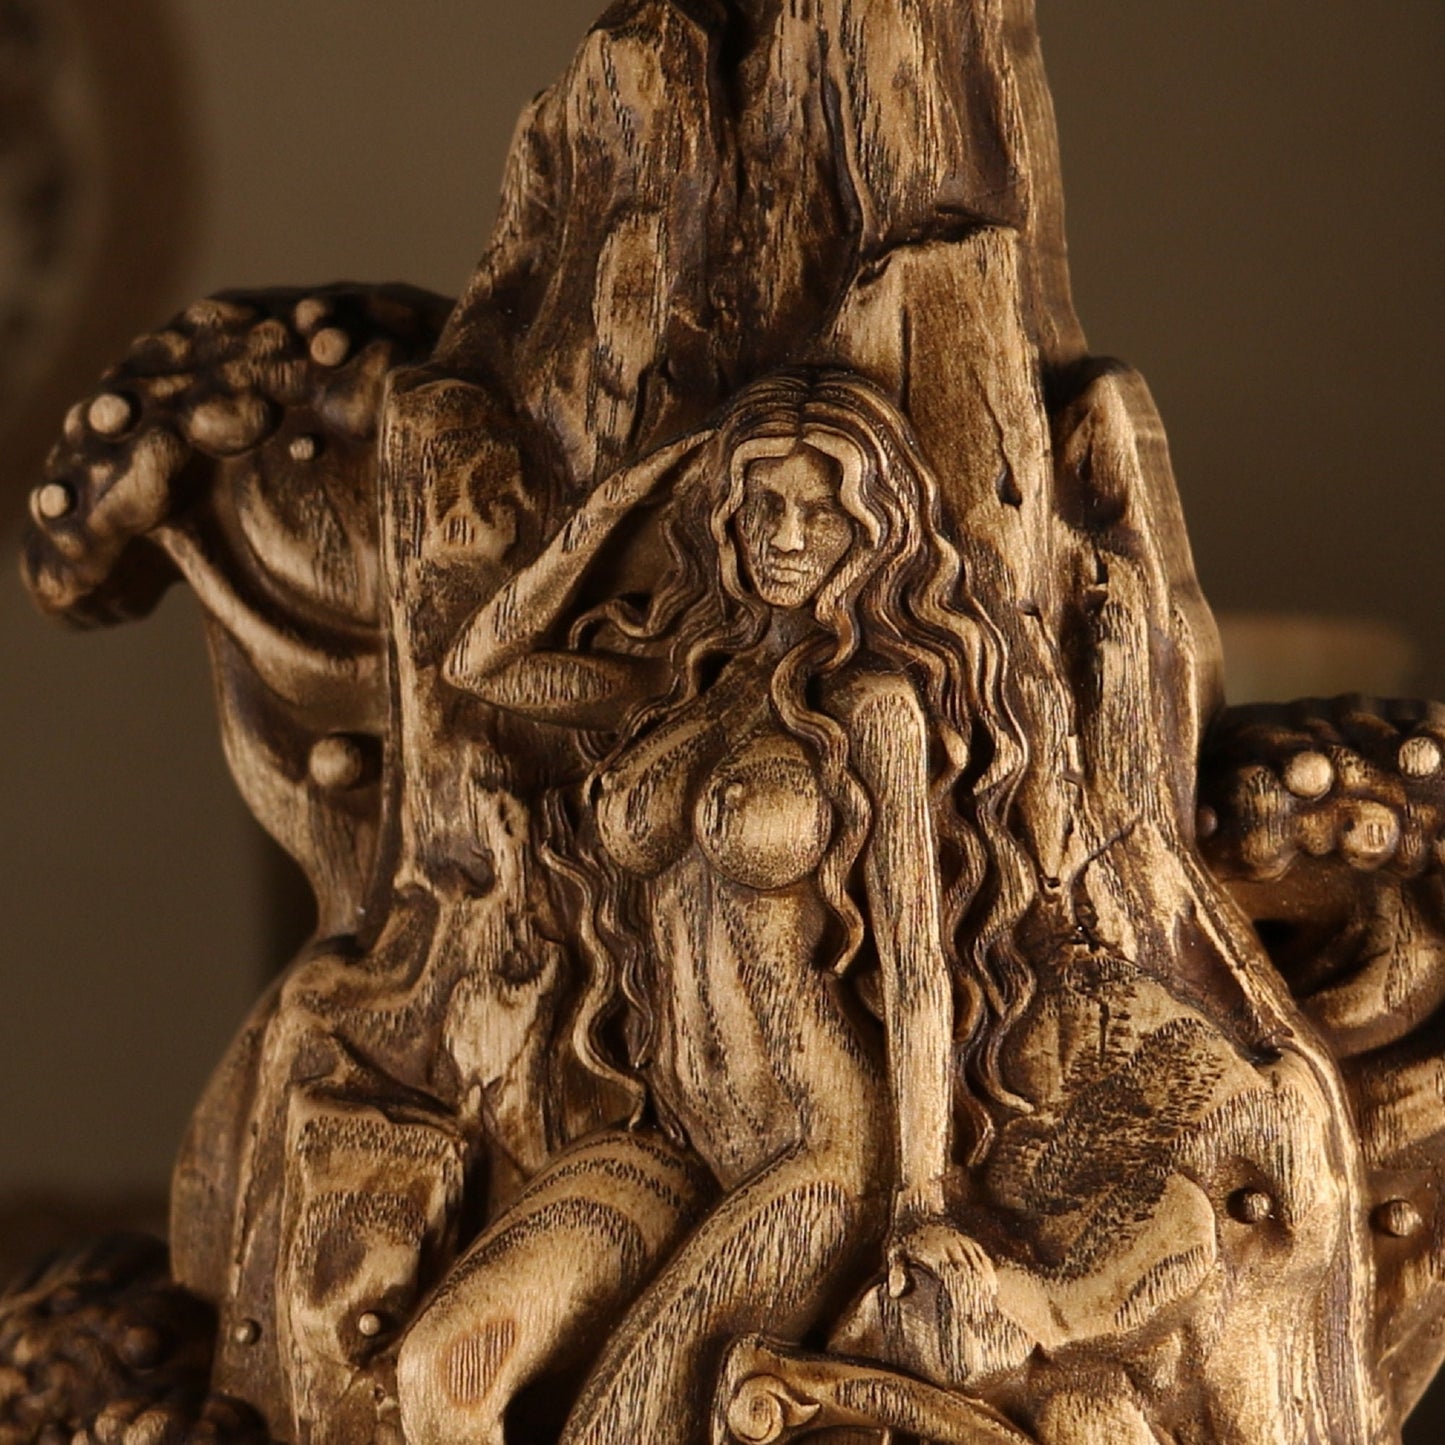 Lorelei , Loreley Nymph, Goddess statue, Wicca statue, Wooden statue